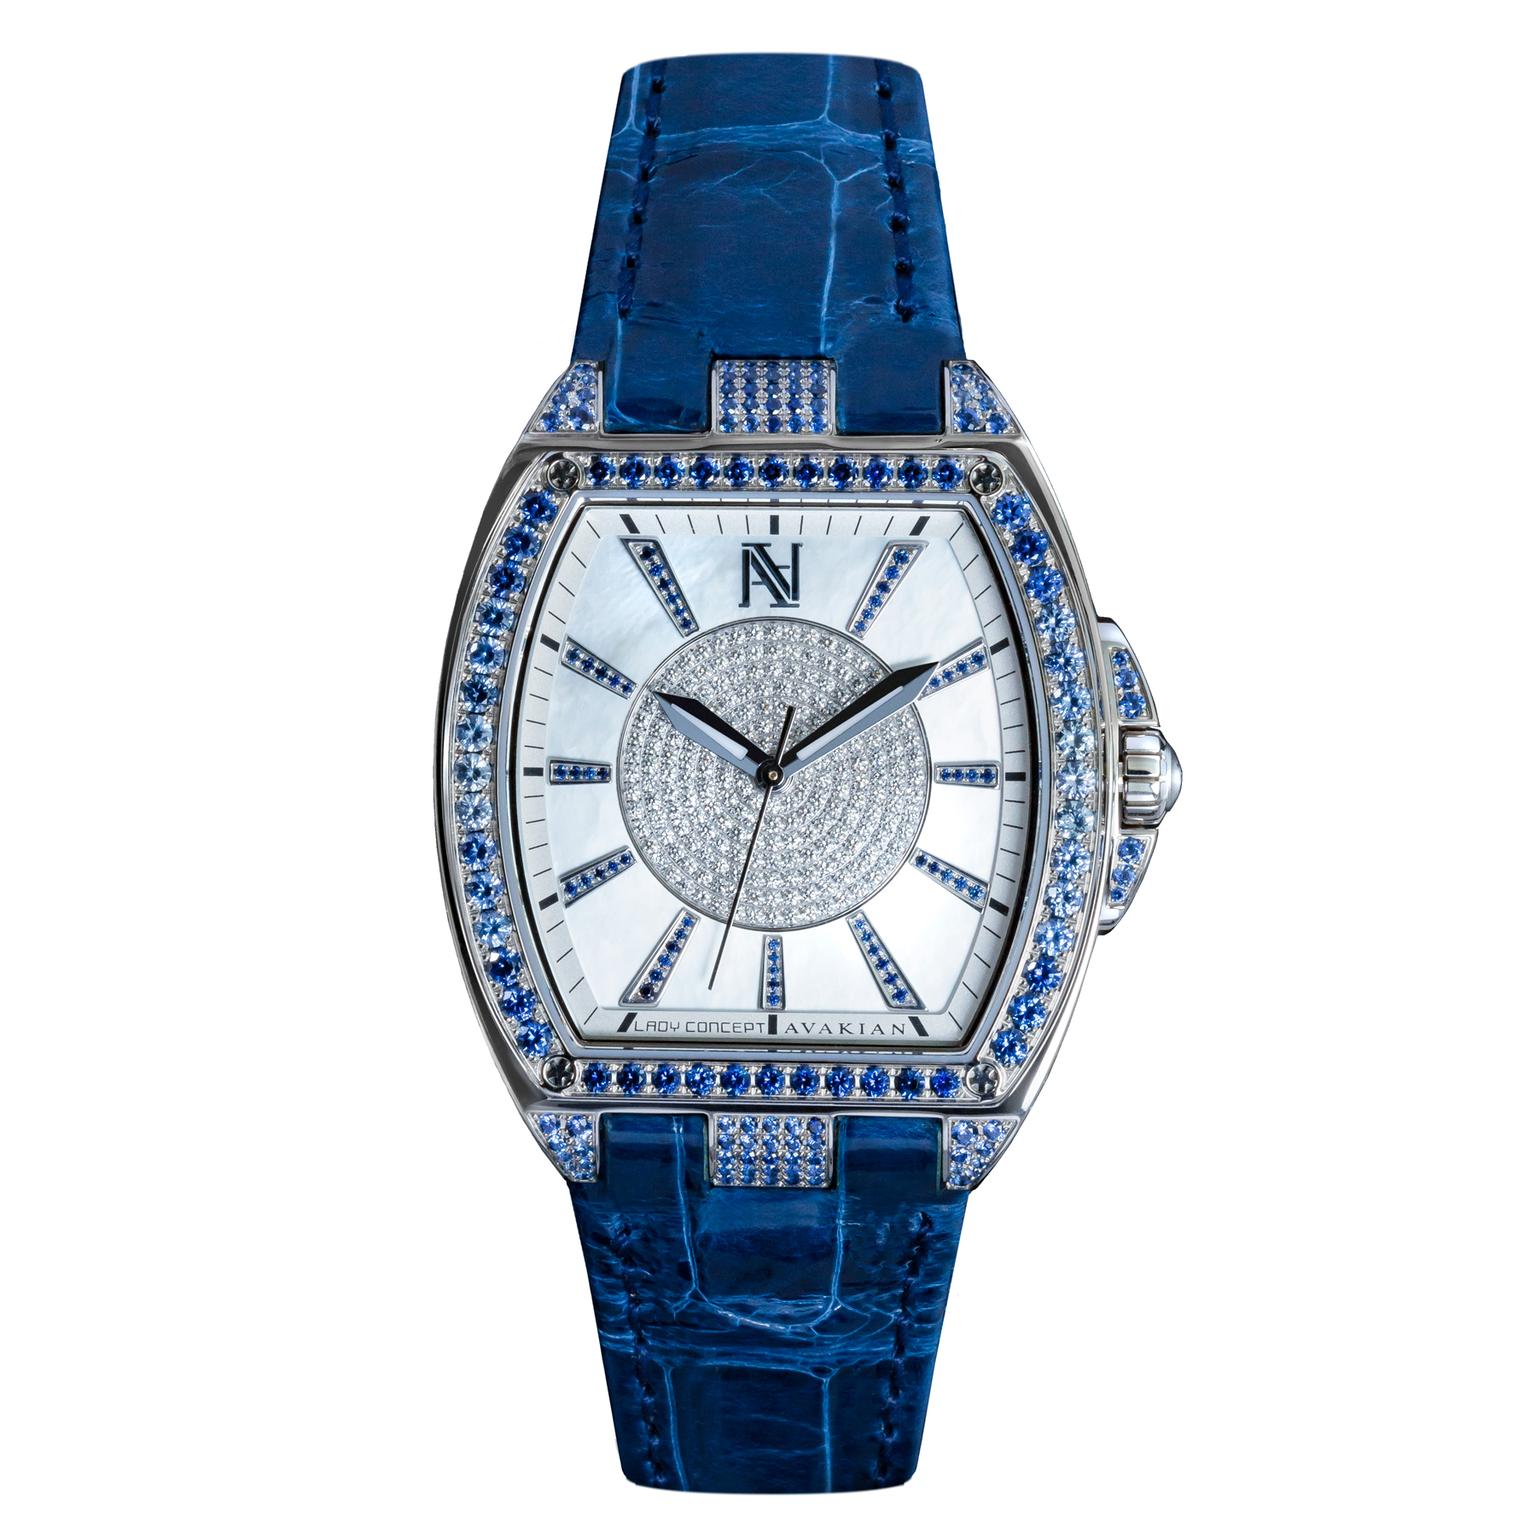 Avakian Lady Concept Blue Gradient watch